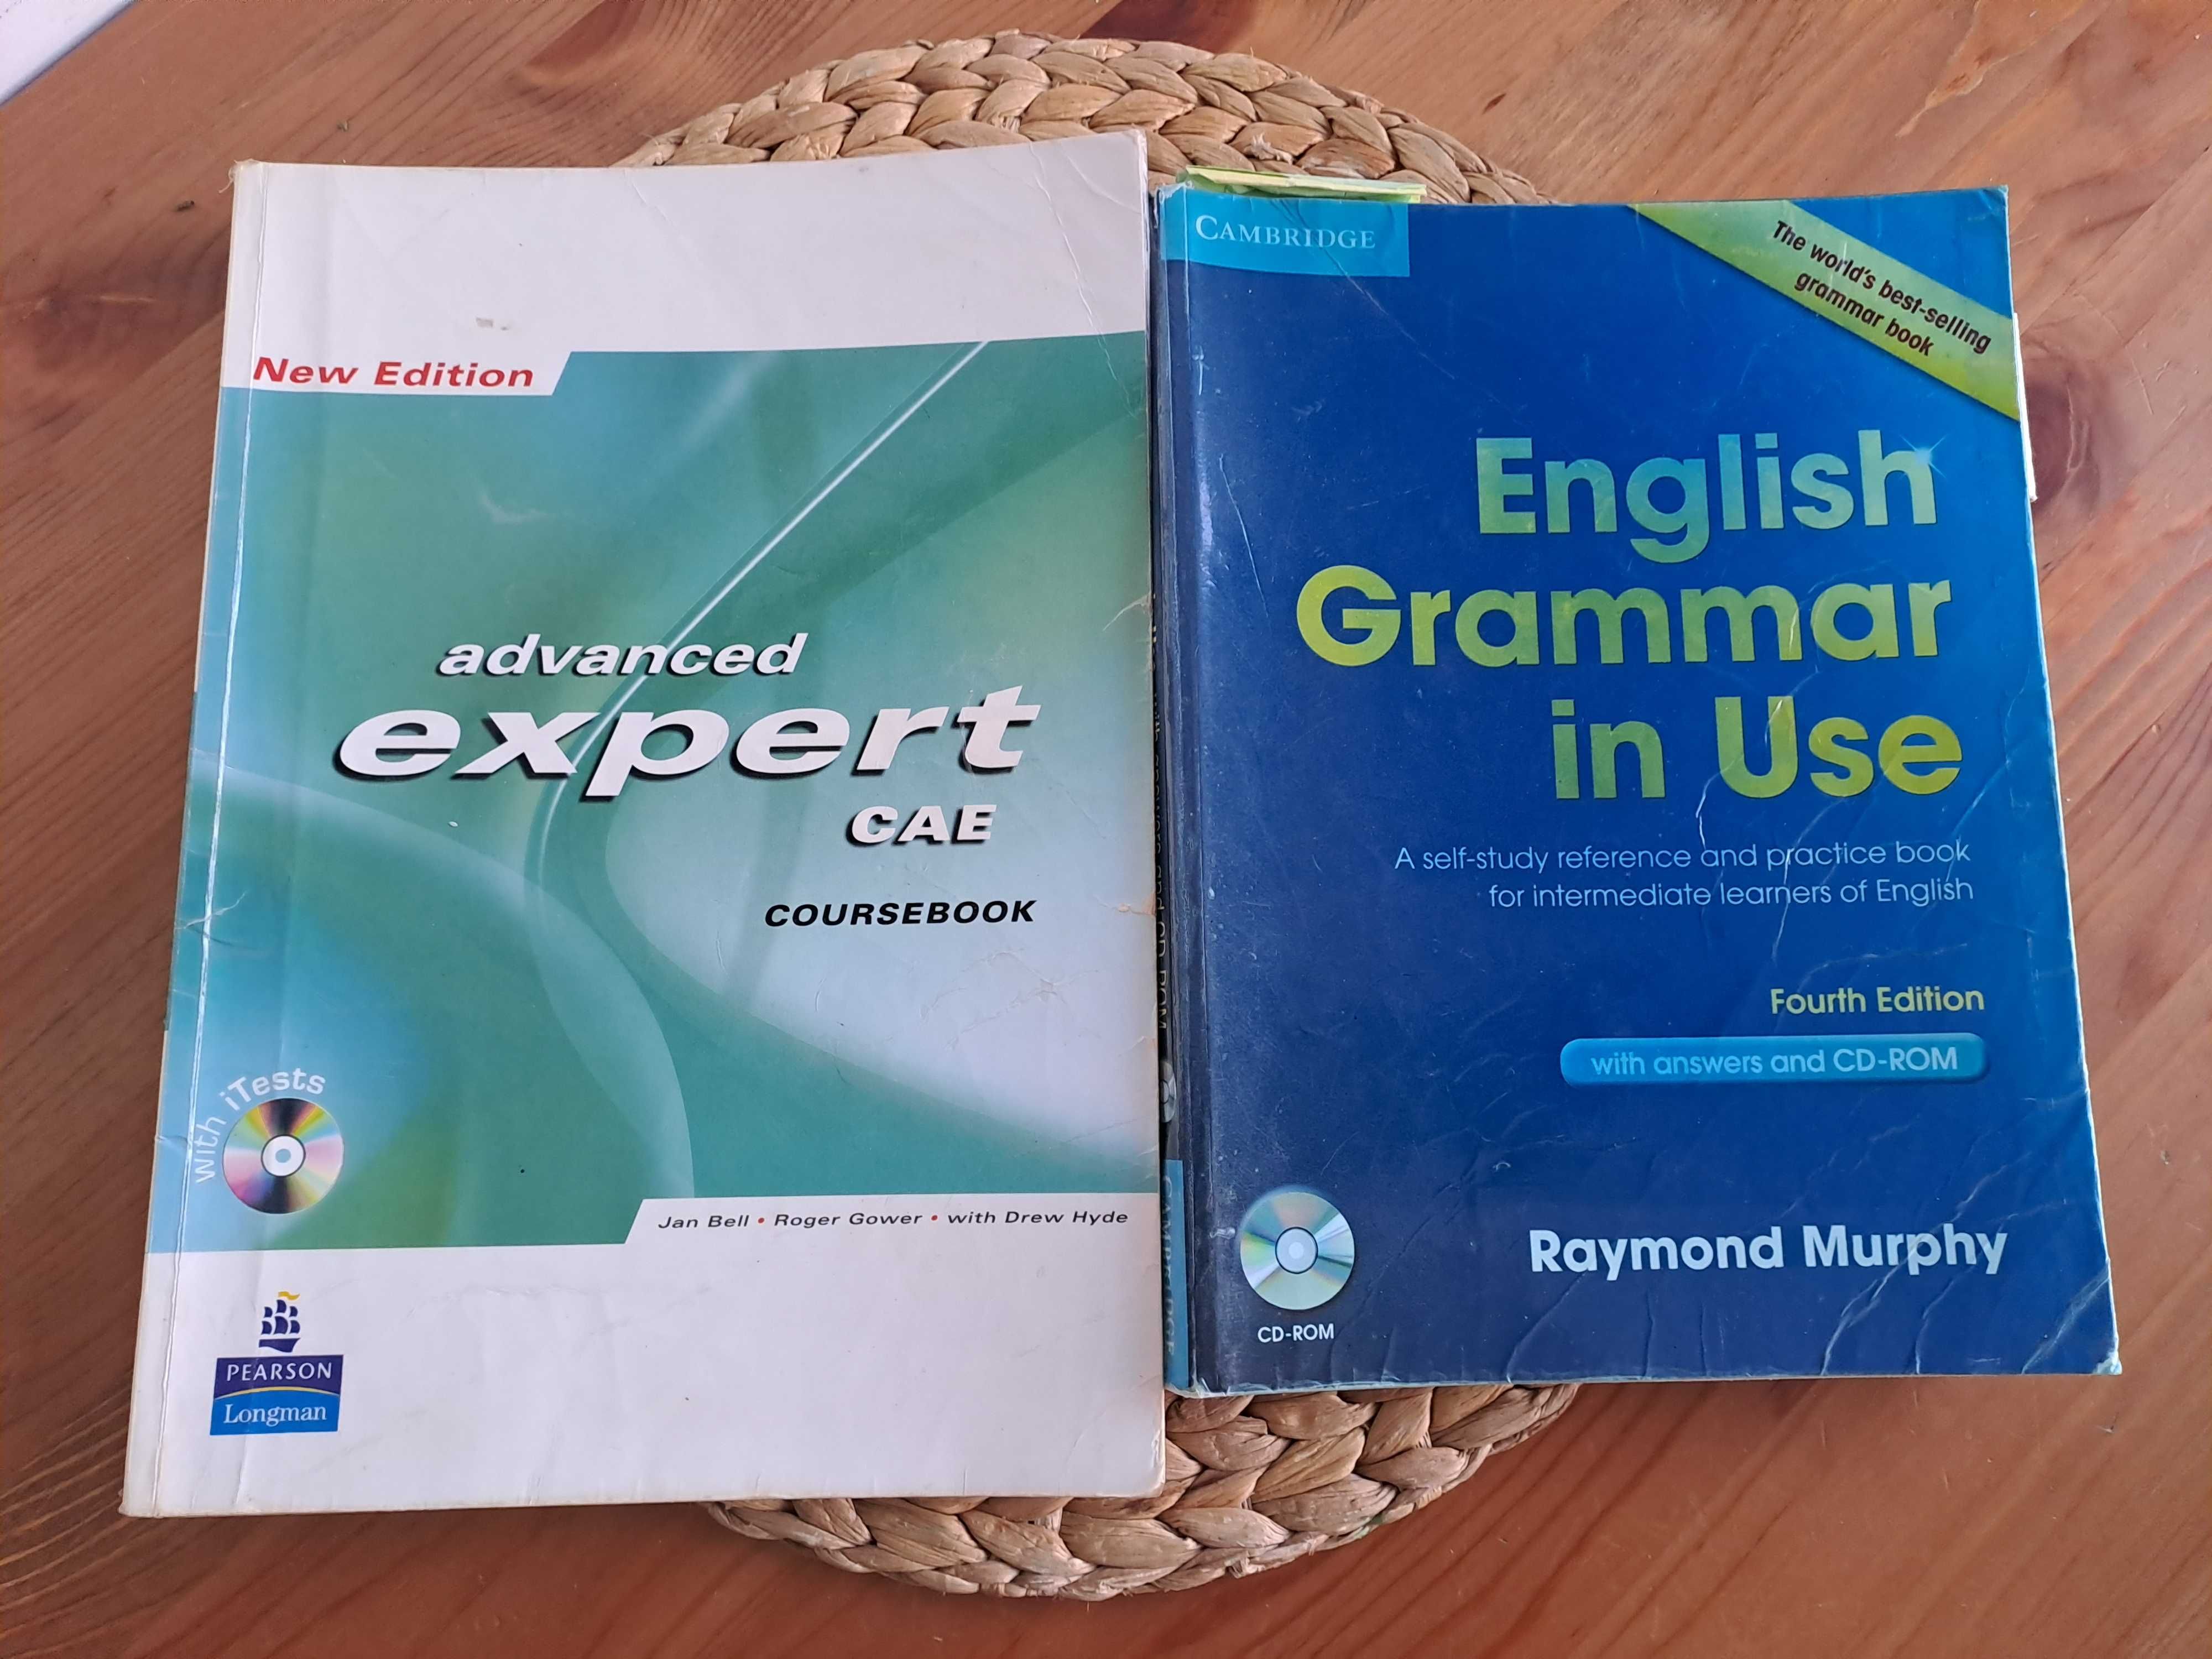 English Grammar in Use+Advanced Expert Coursebook